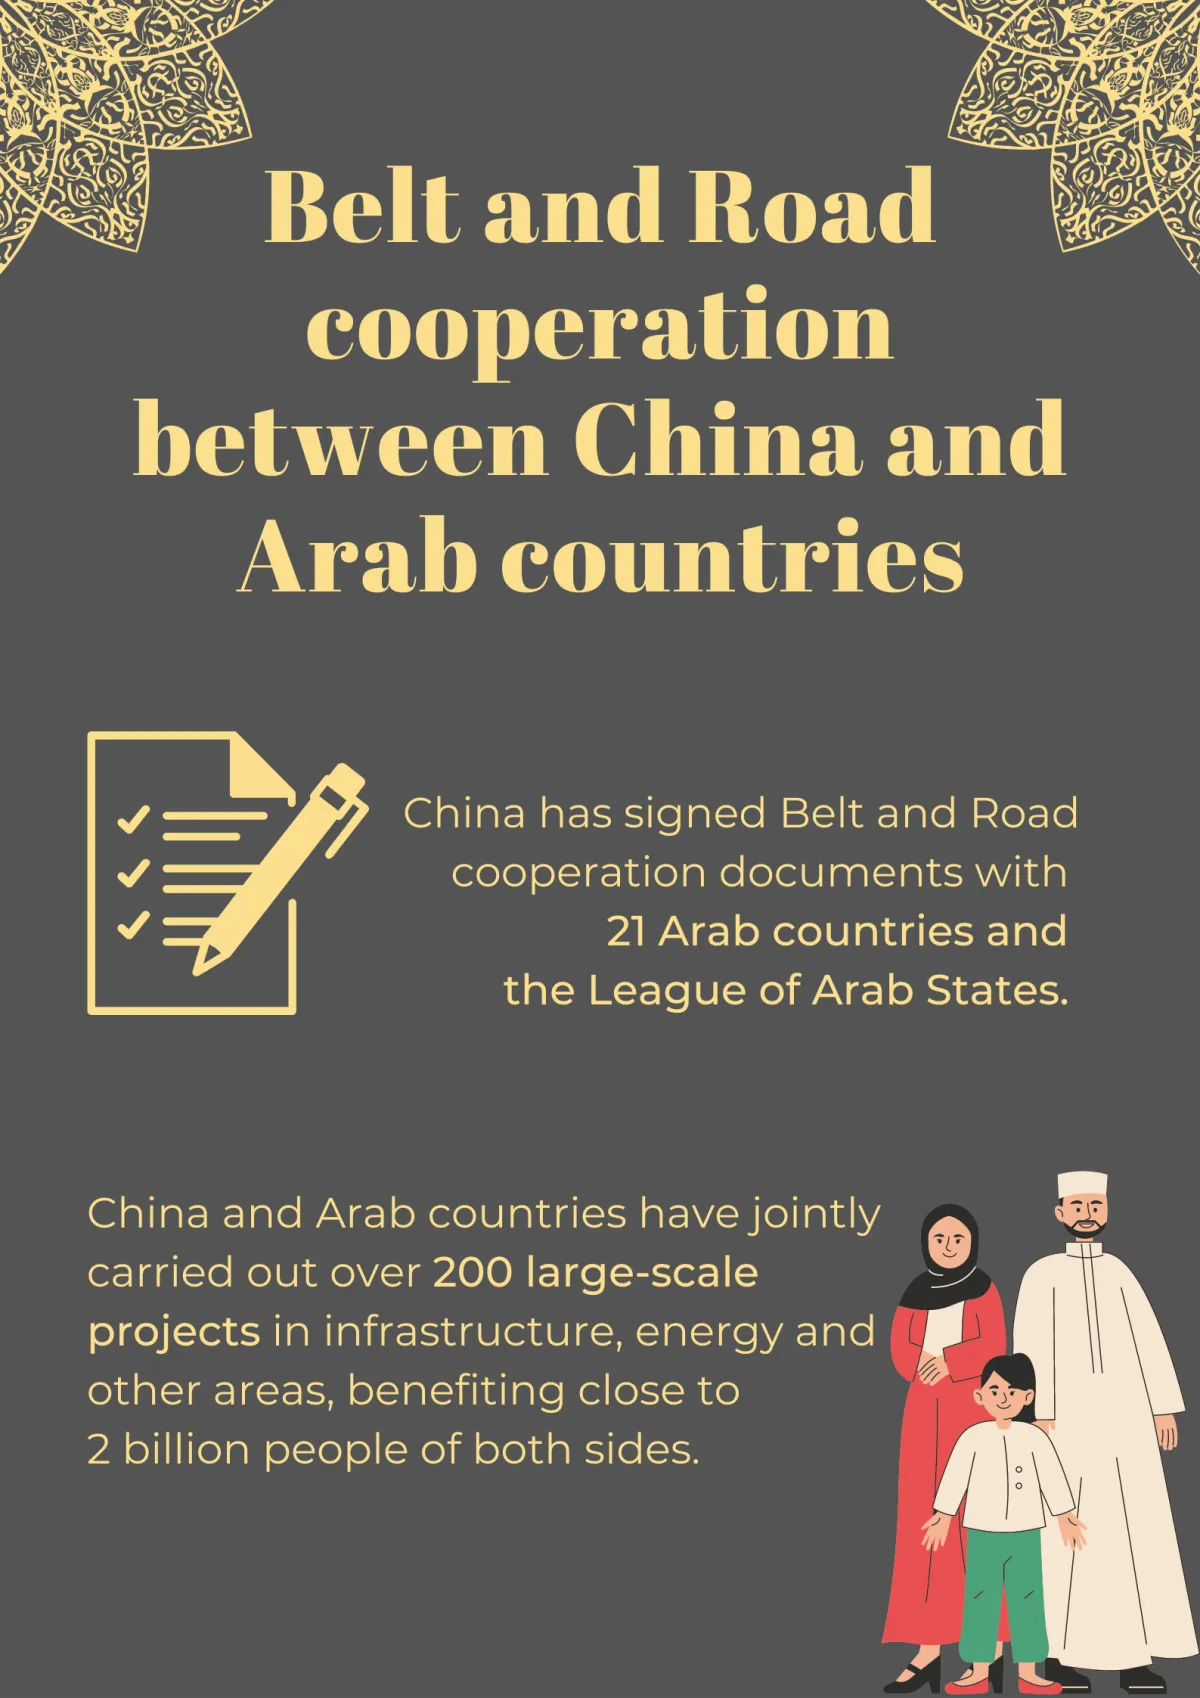 China and Arab countries